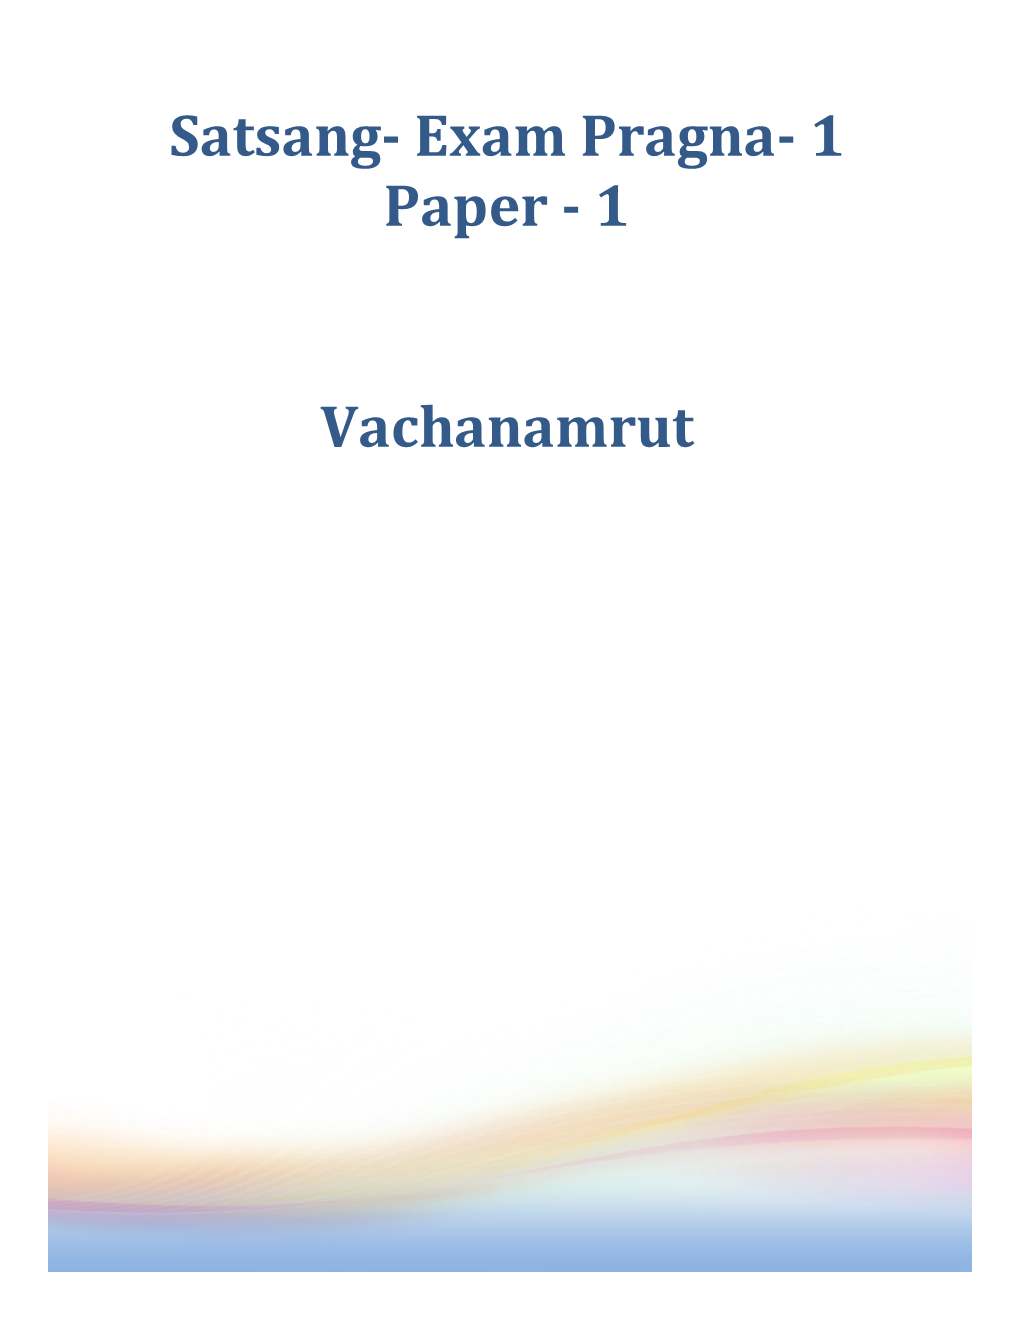 Satsang- Exam Pragna- 1 Paper - 1